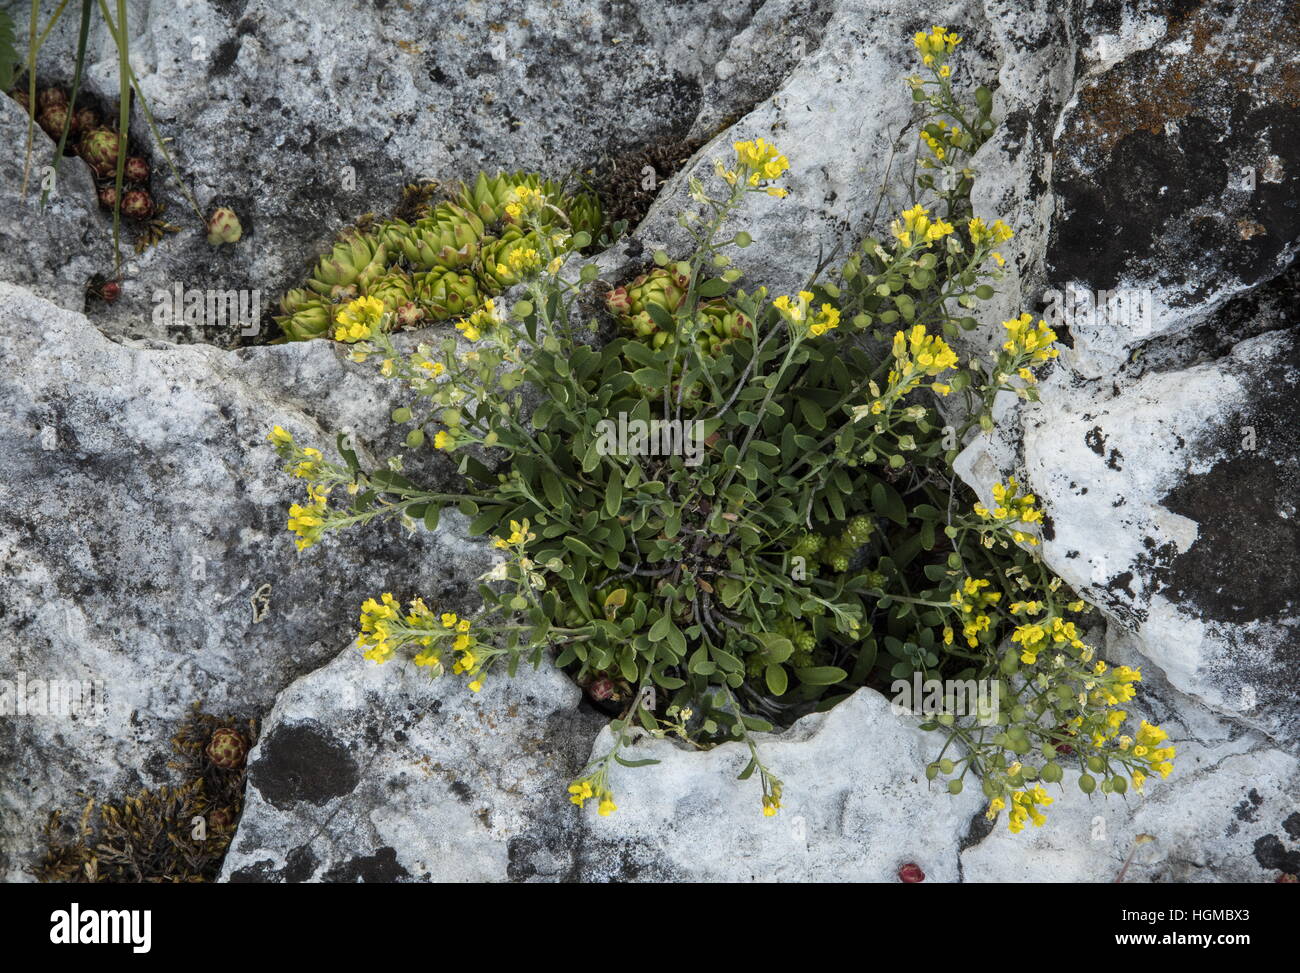 Mountain Alison, Alyssum montanum in flower and fruit, on travertine rock, Slovakia. Stock Photo